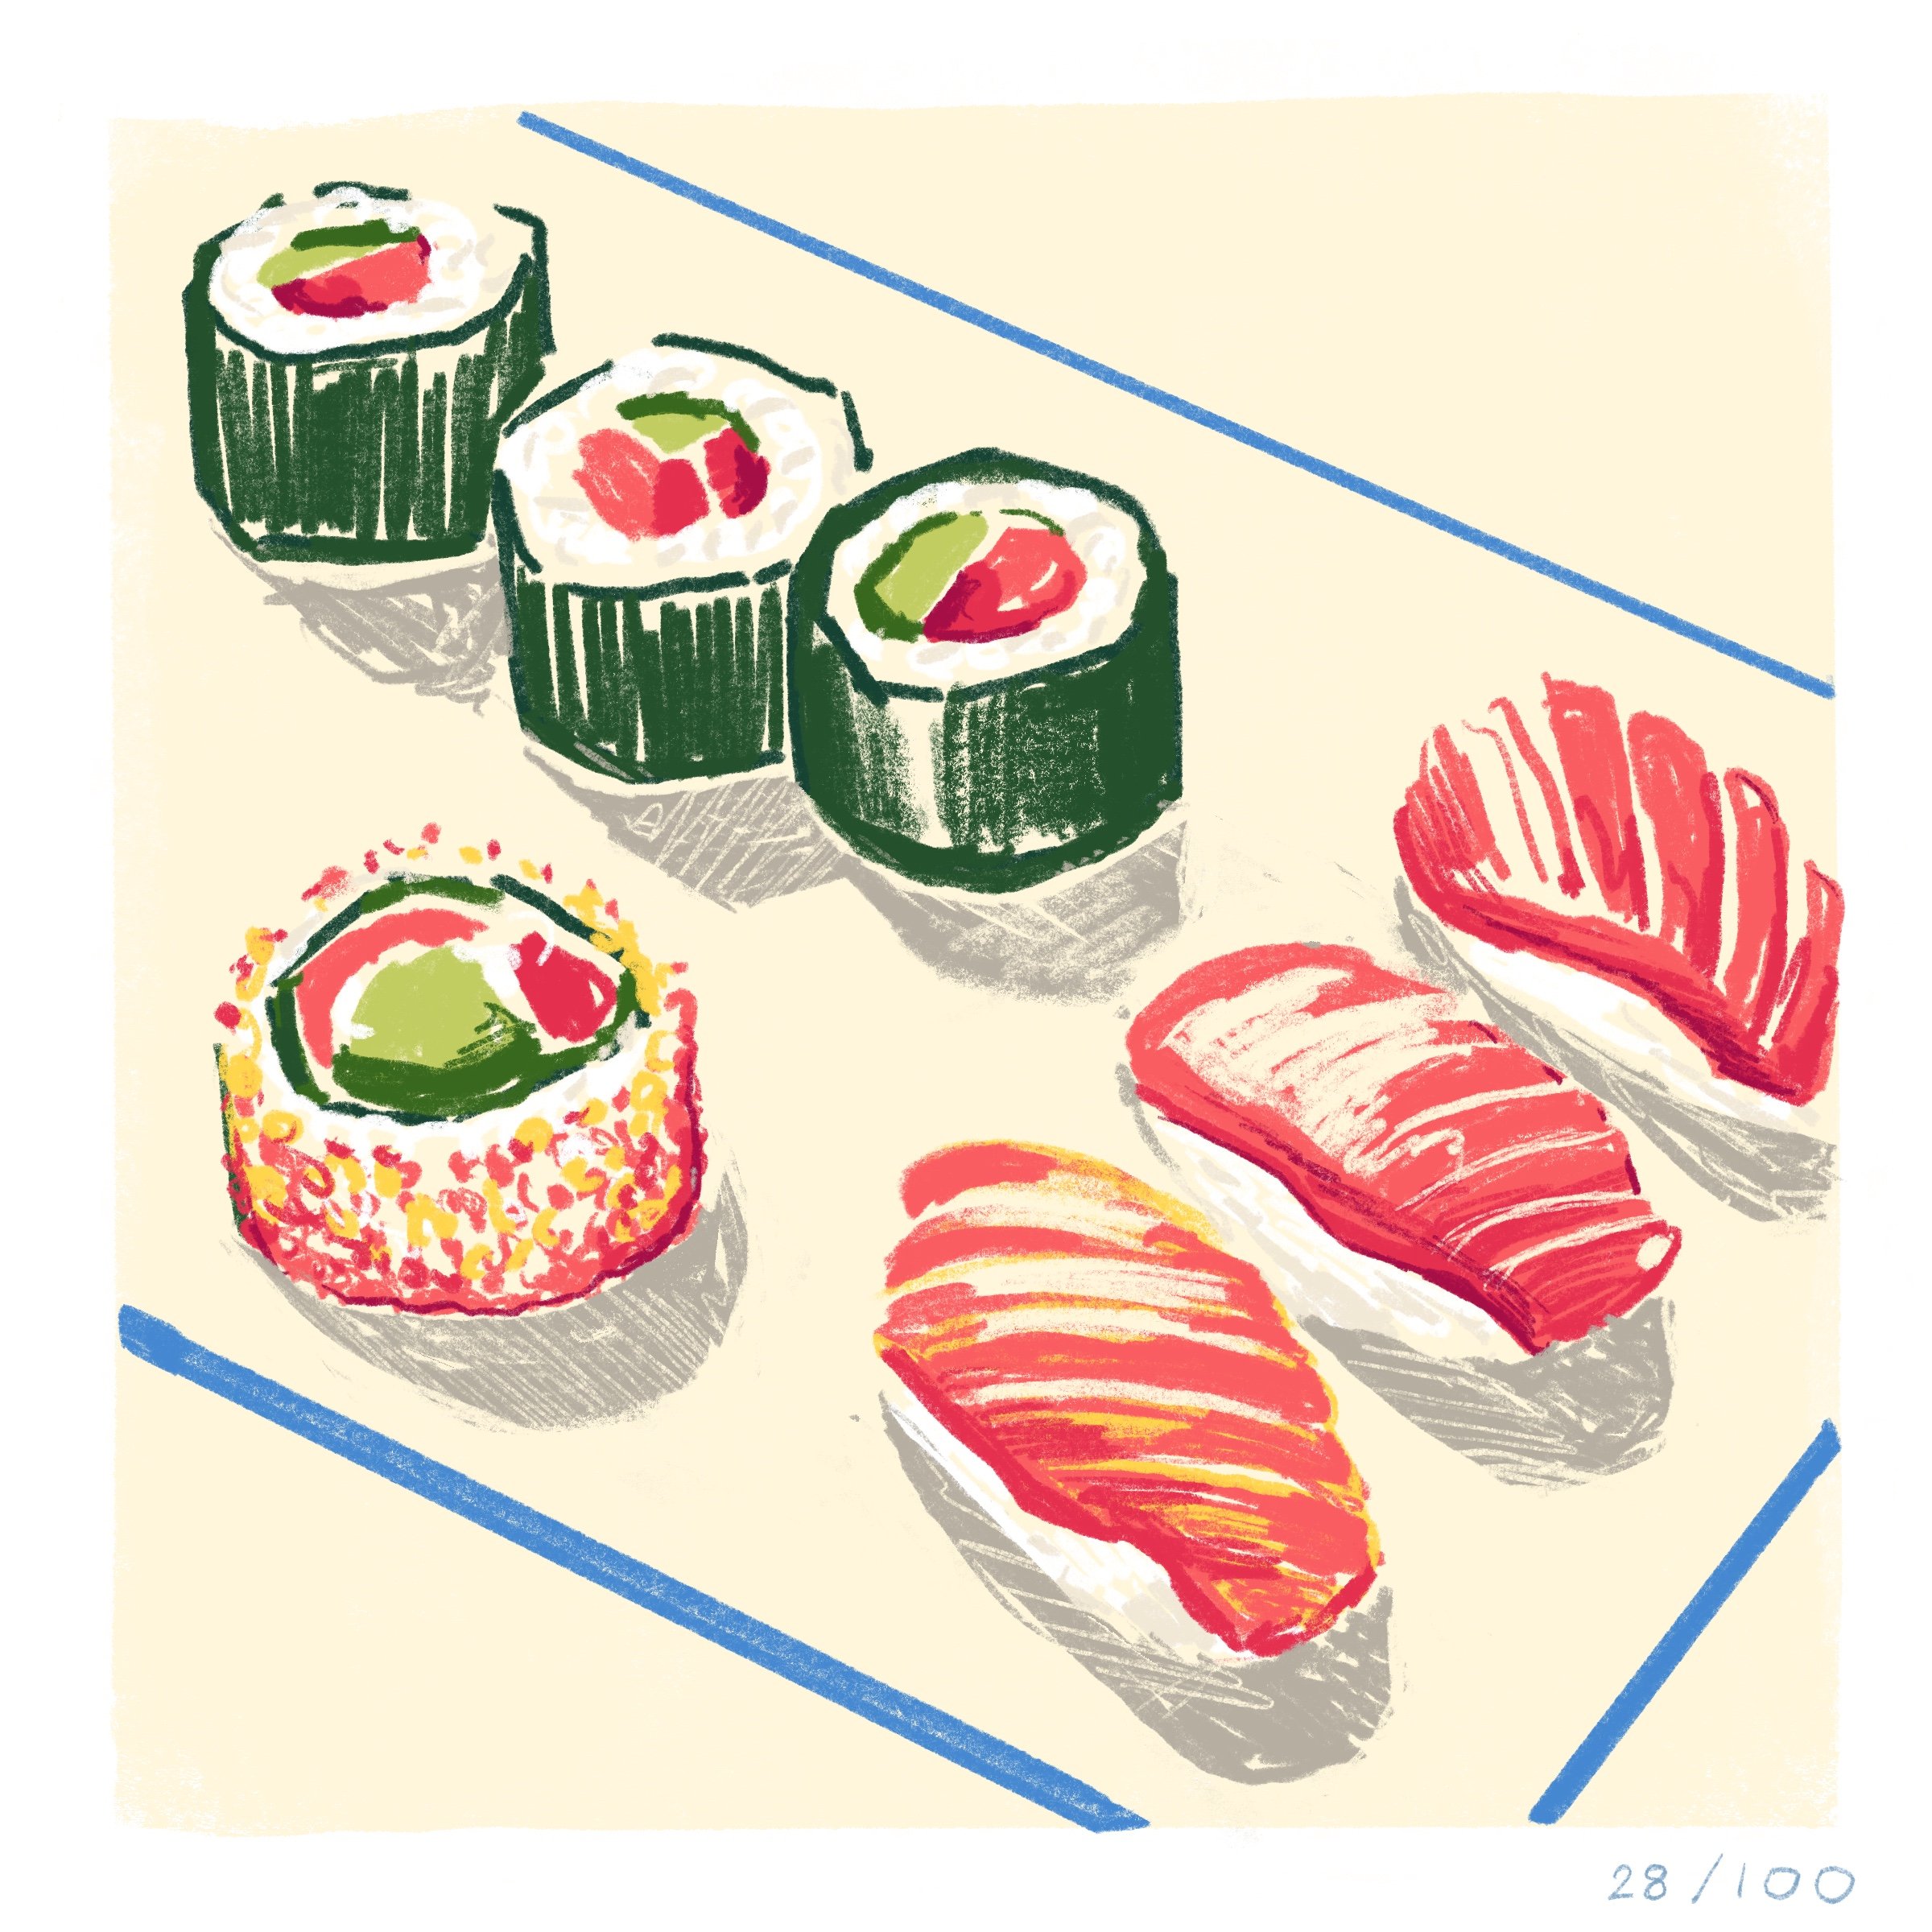 Sushi illustration